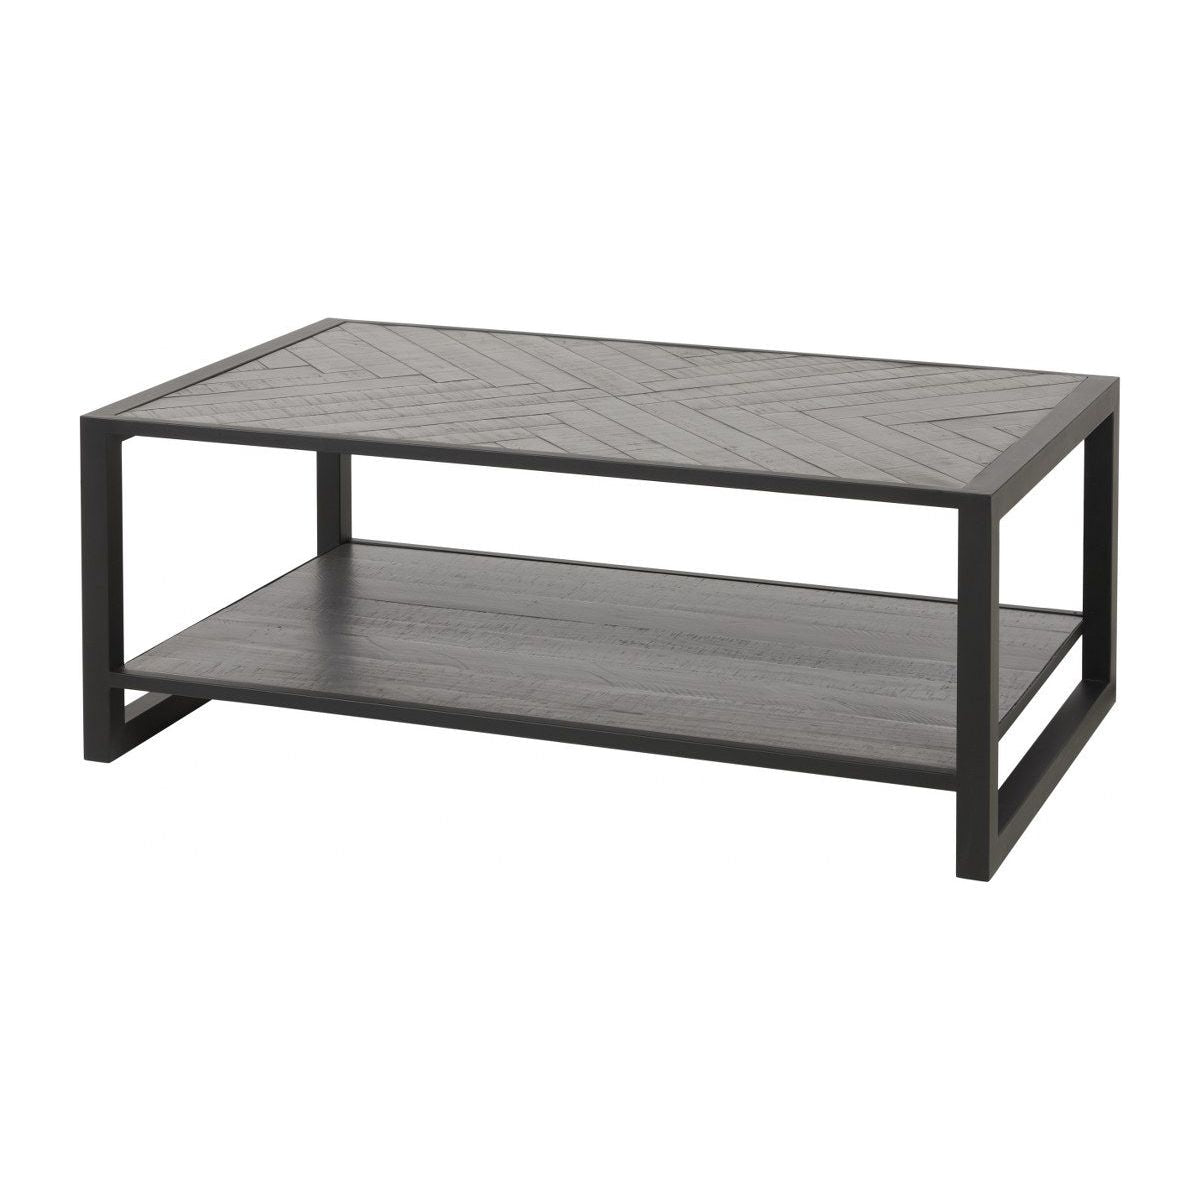 Coffee table | Furniture series Micras | Dark gray, black | 120x